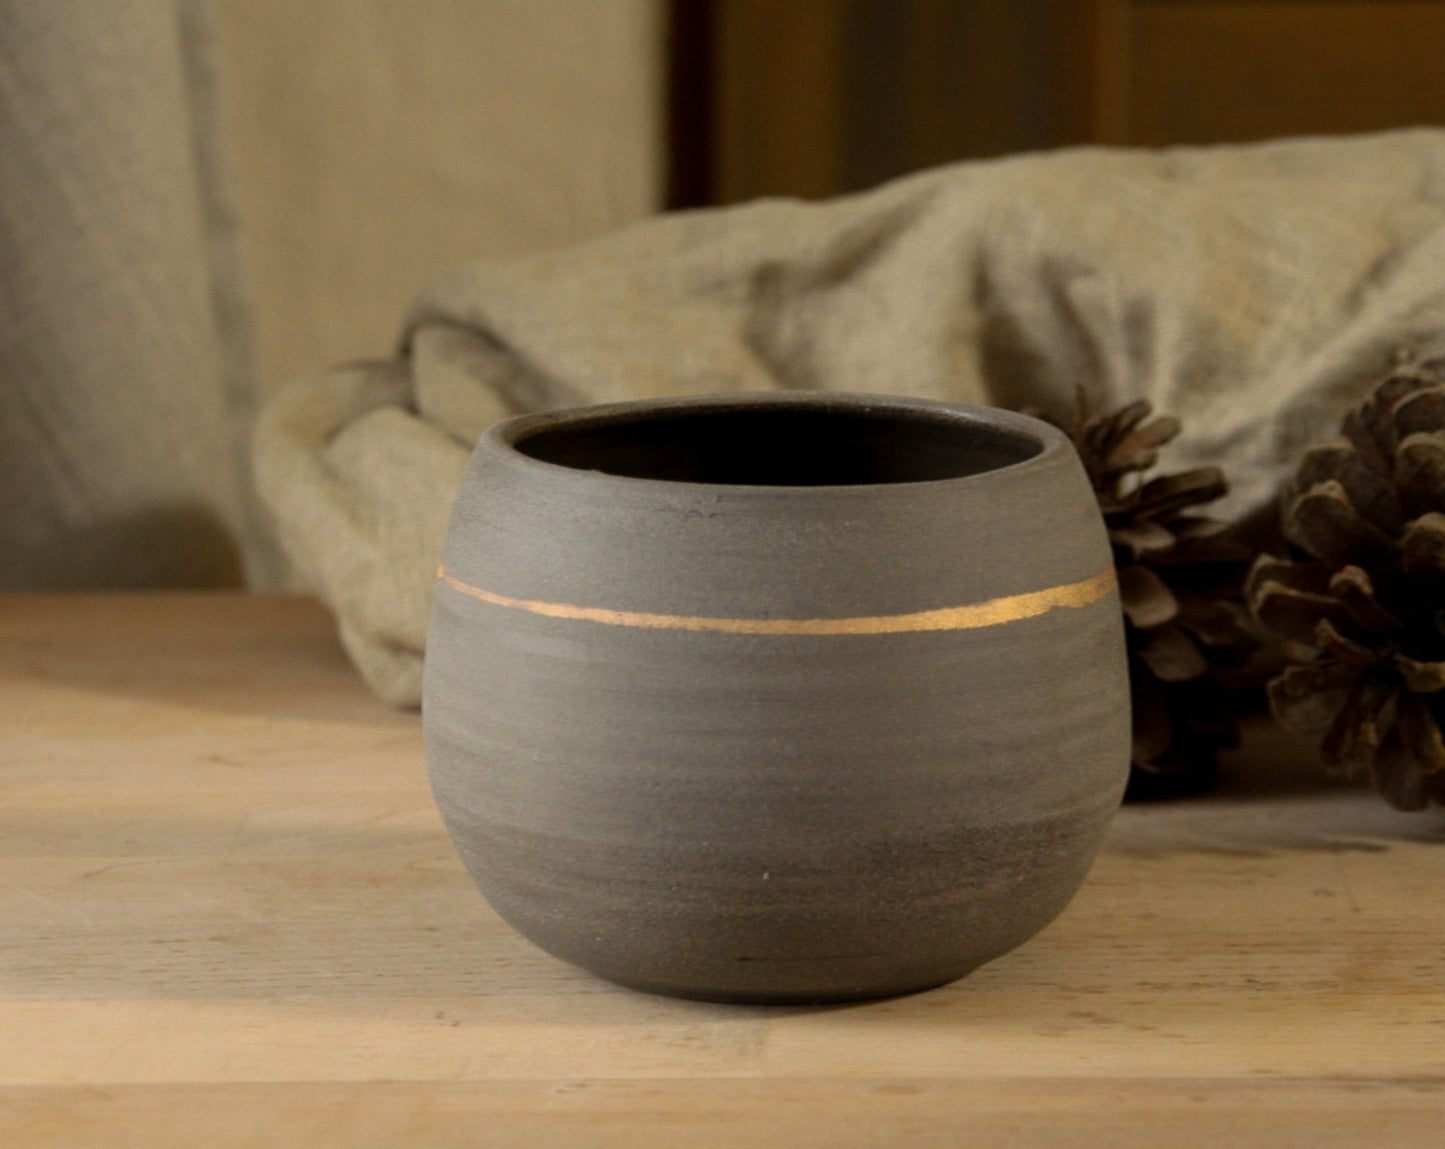 Handmade Ceramic Bowl: Modern Minimalist Style for the Kitchen